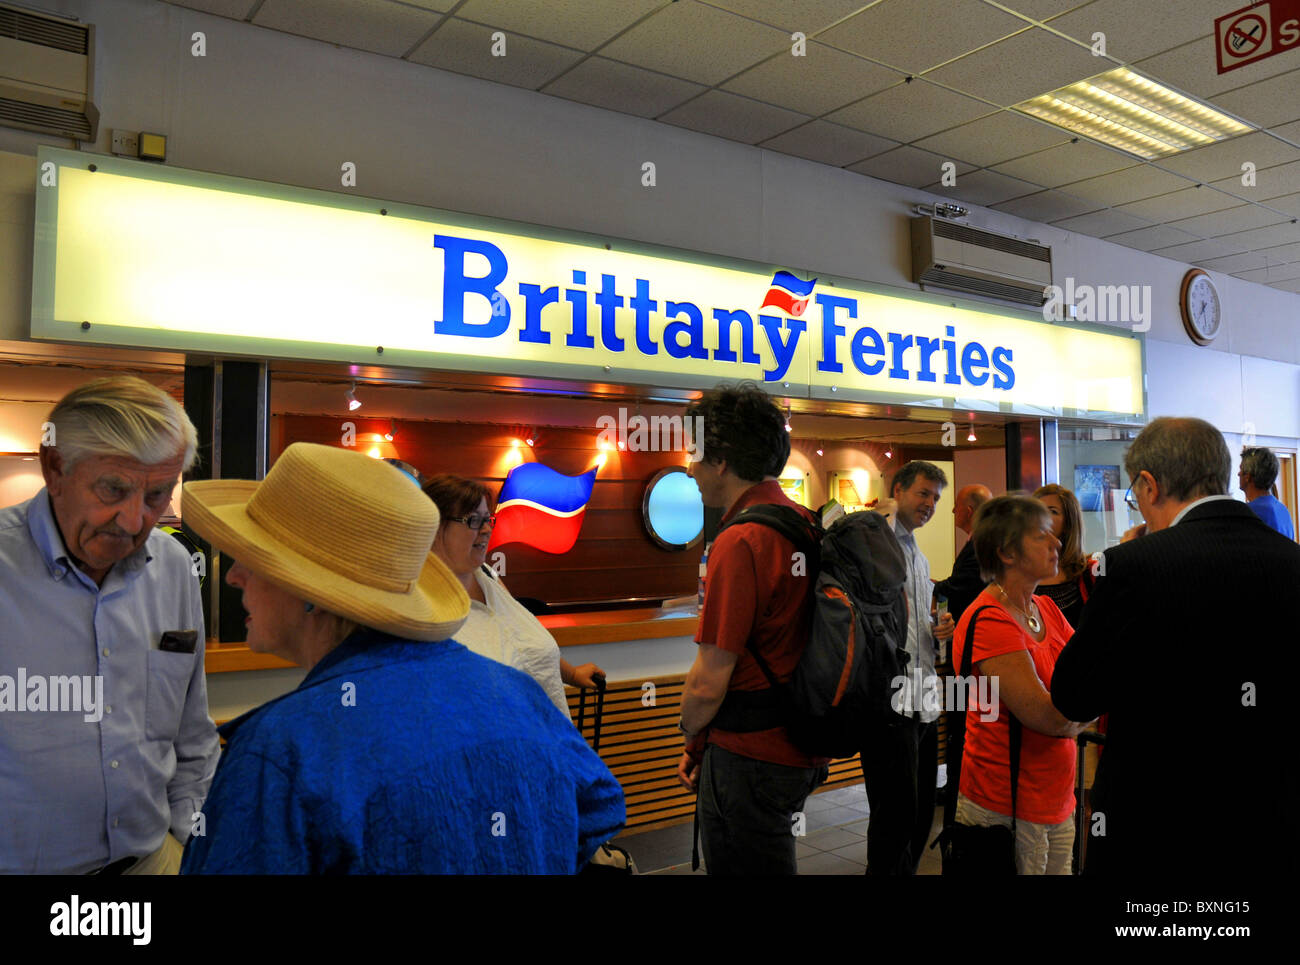 Brittany Ferries rapides, terminal de ferries de Portsmouth, Portsmouth, Hampshire, Angleterre, Royaume-Uni Banque D'Images